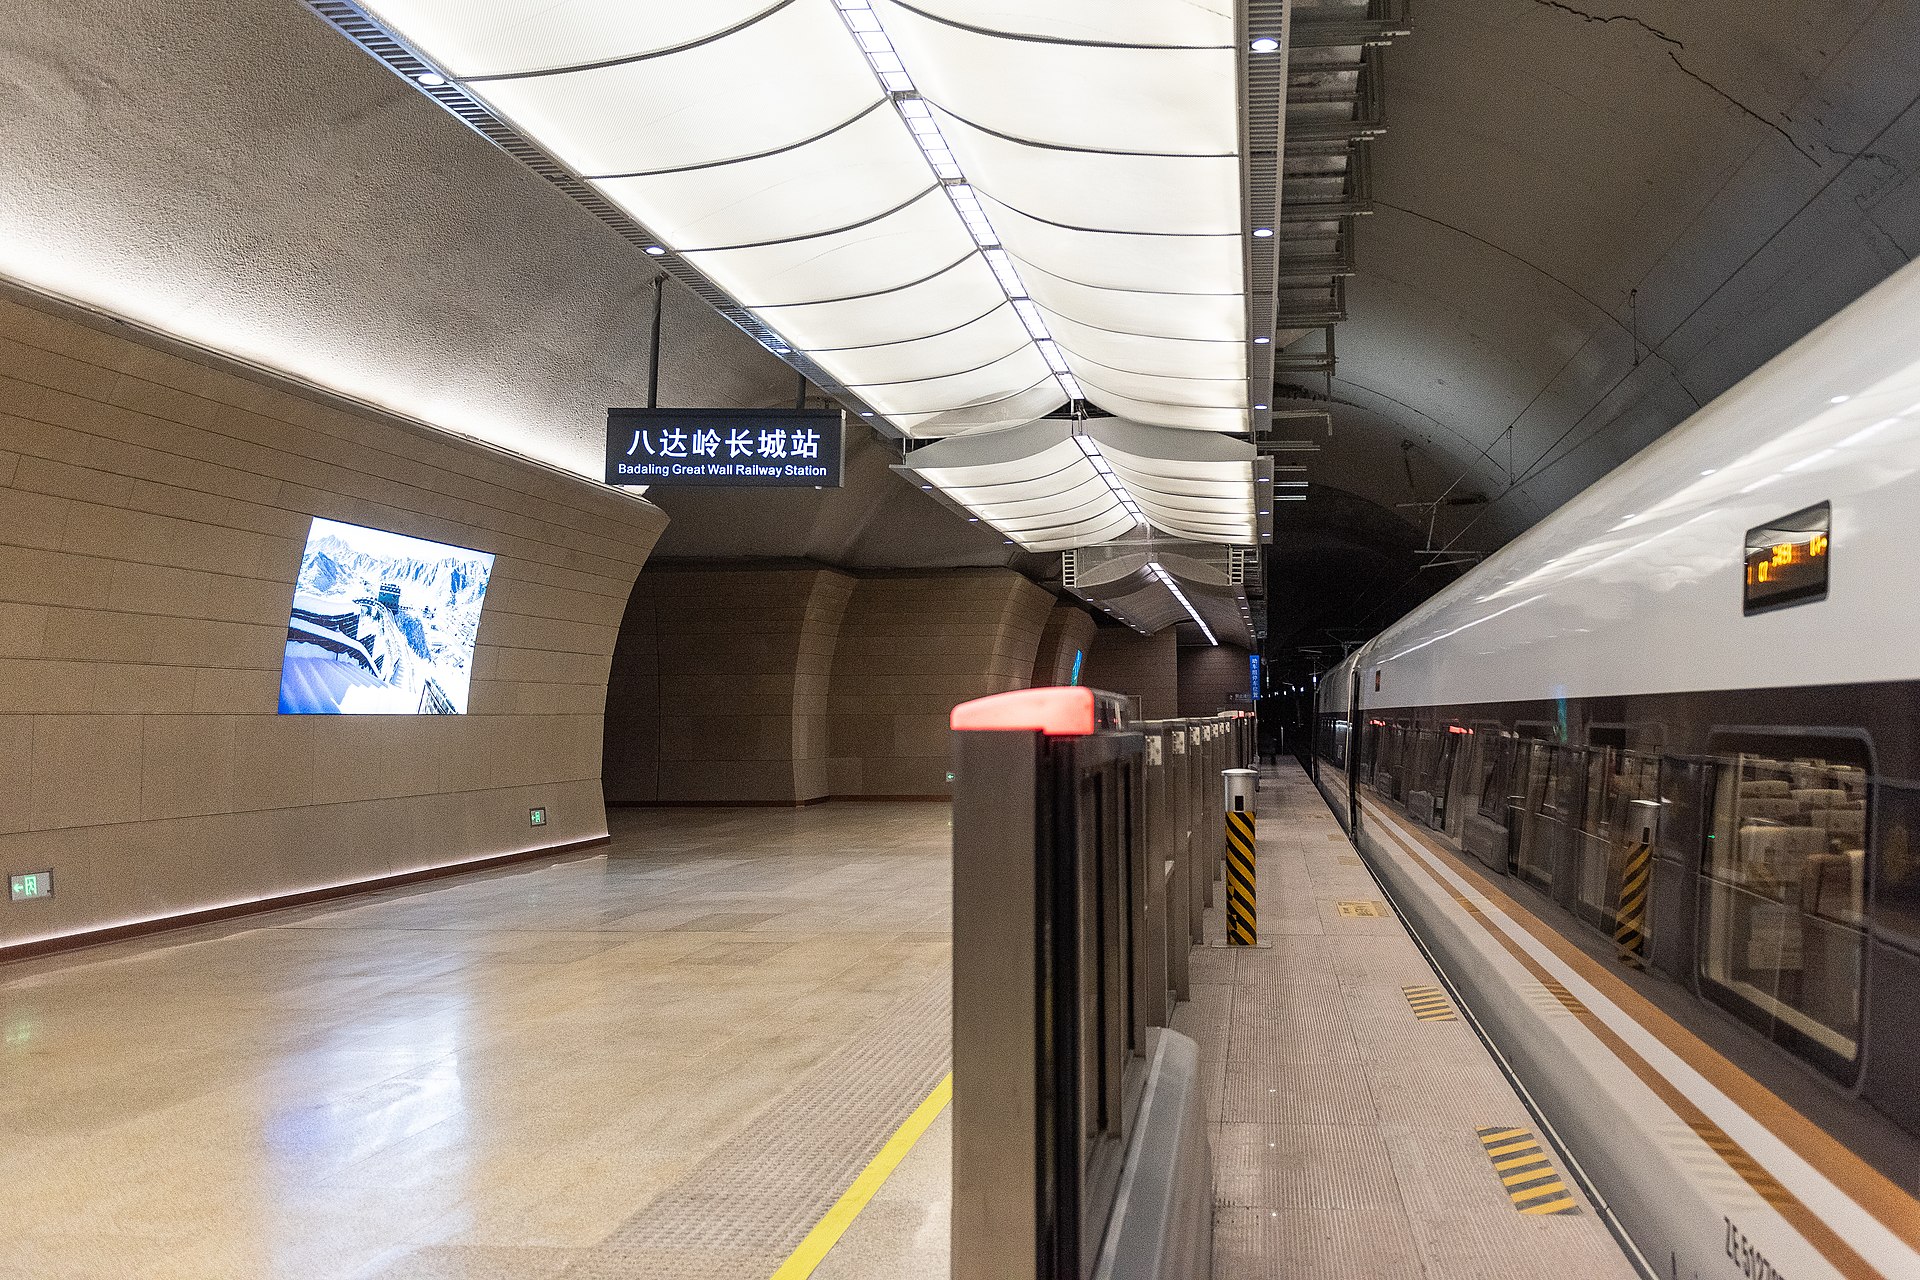 1920px-Platform_2_end_of_Badaling_Great_Wall_Railway_Station_(20201201173058).jpg